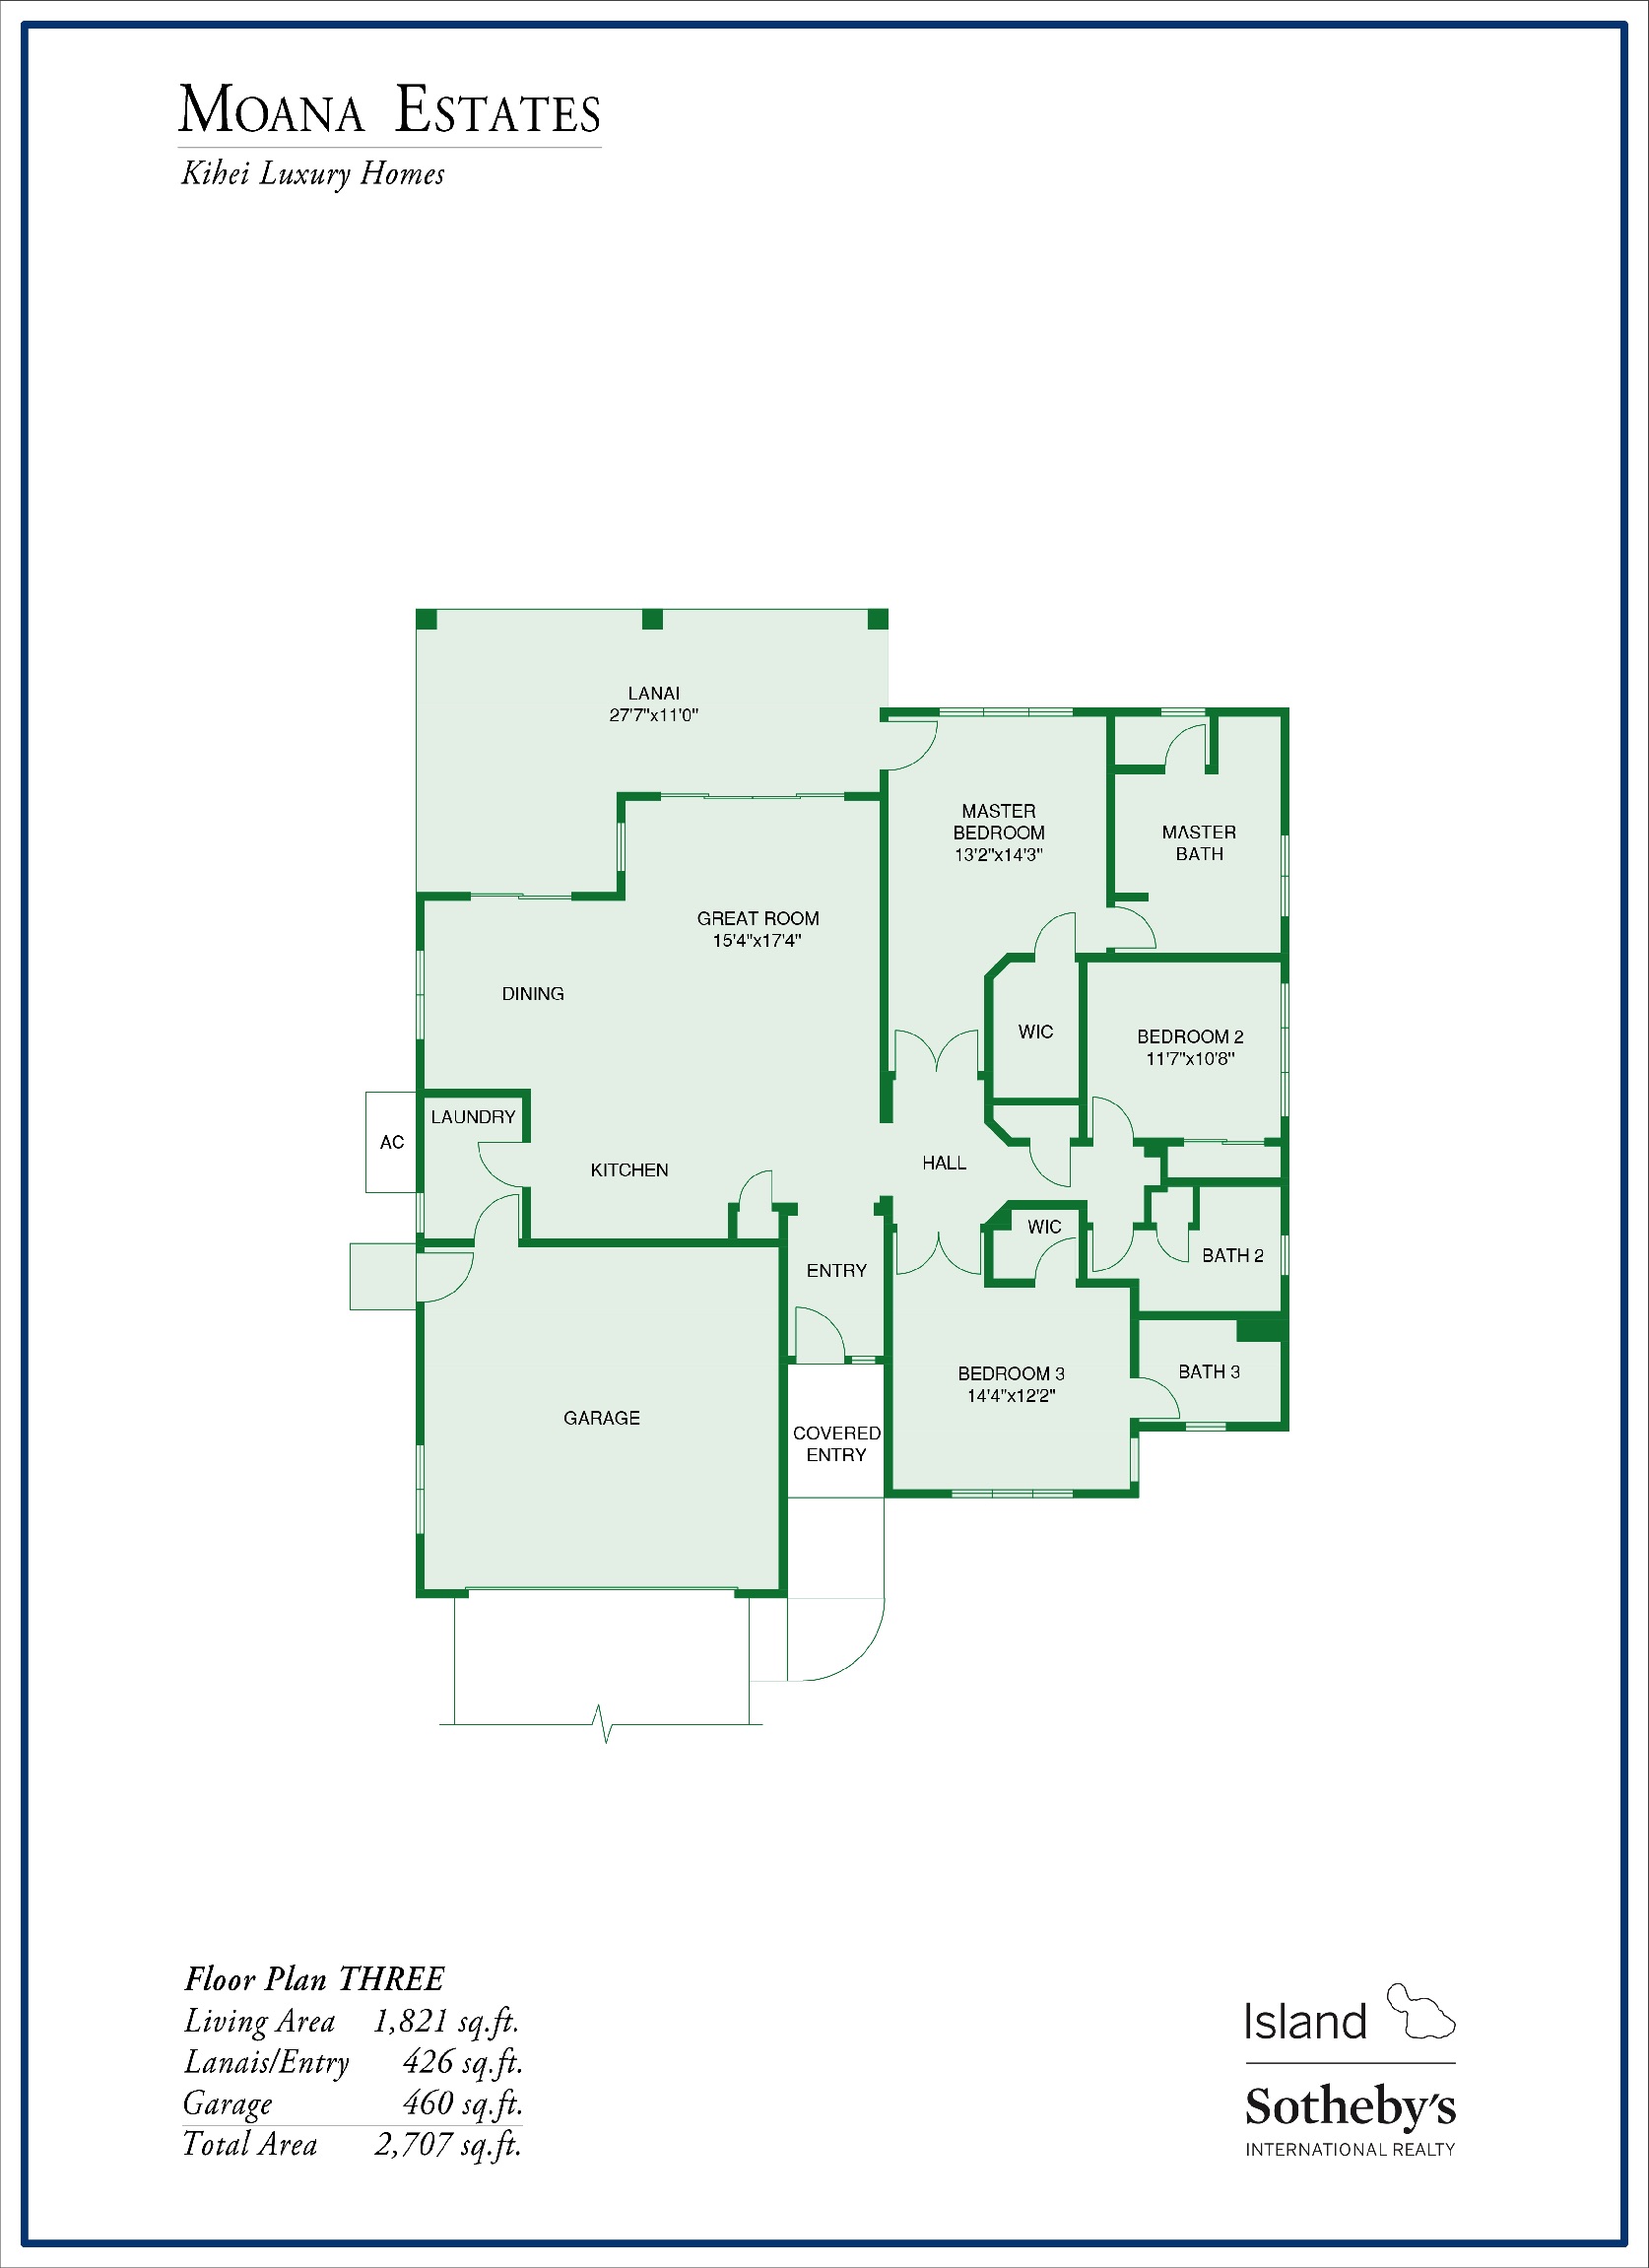 Moana Estates Floor Plan 3